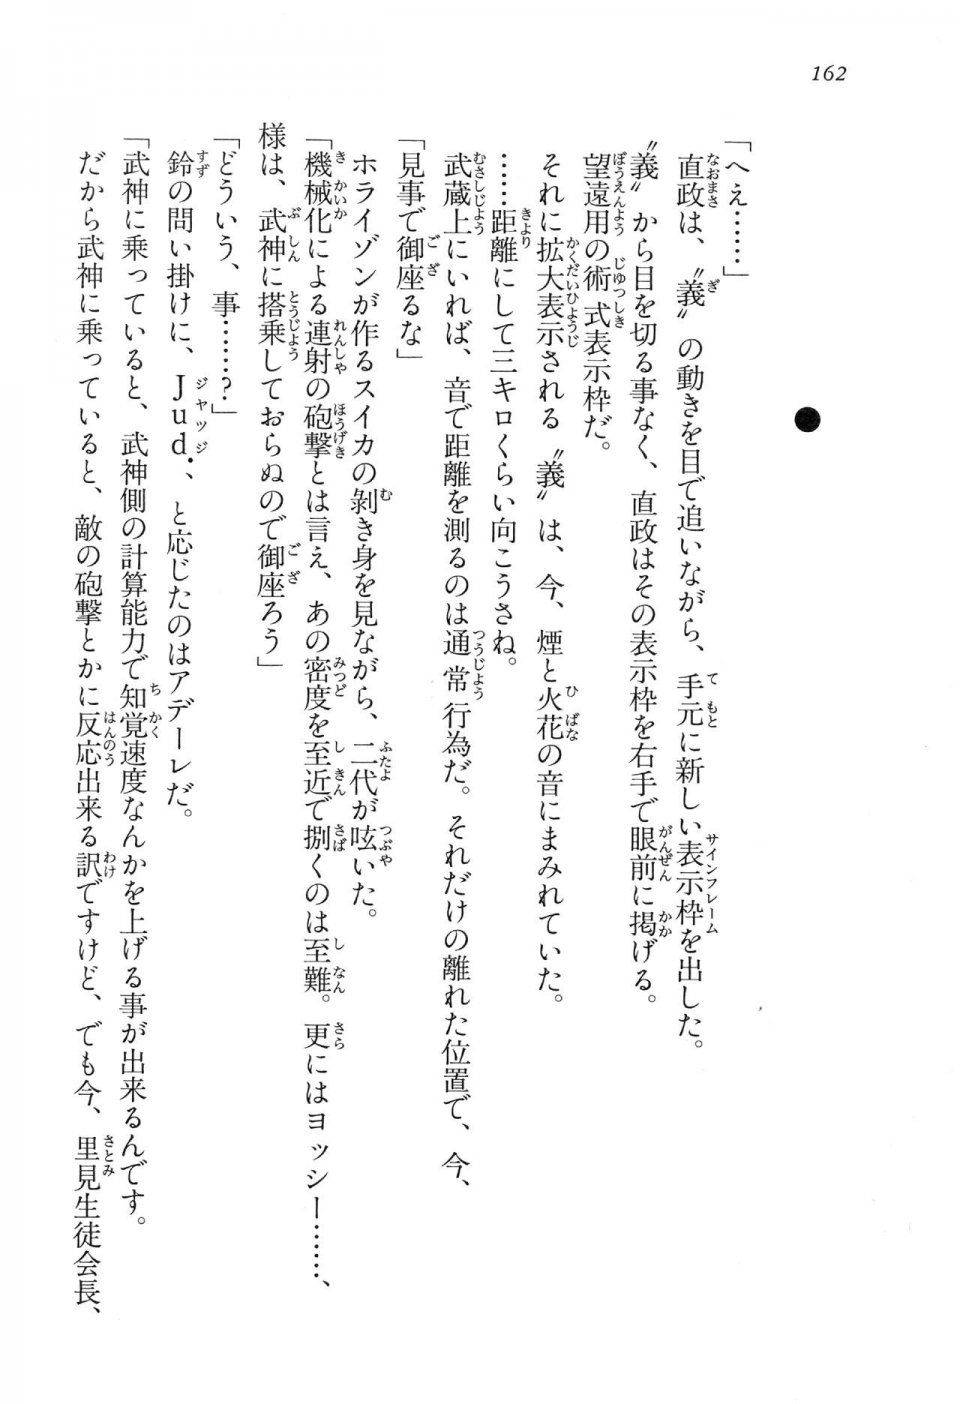 Kyoukai Senjou no Horizon LN Vol 15(6C) Part 1 - Photo #162